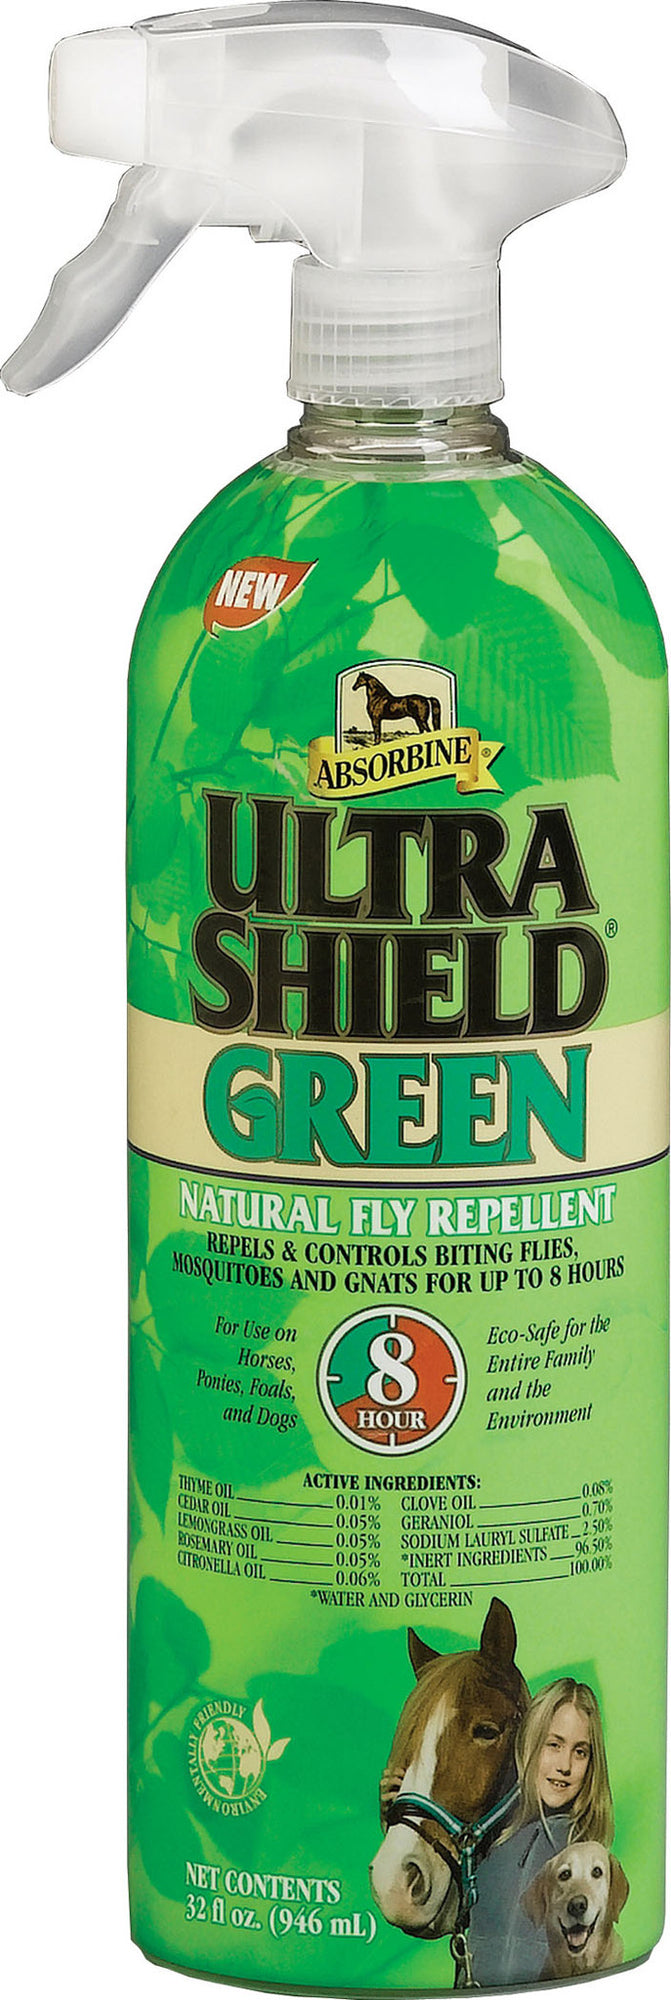 Absorbine Ultrashield Green Natural Fly Repellent